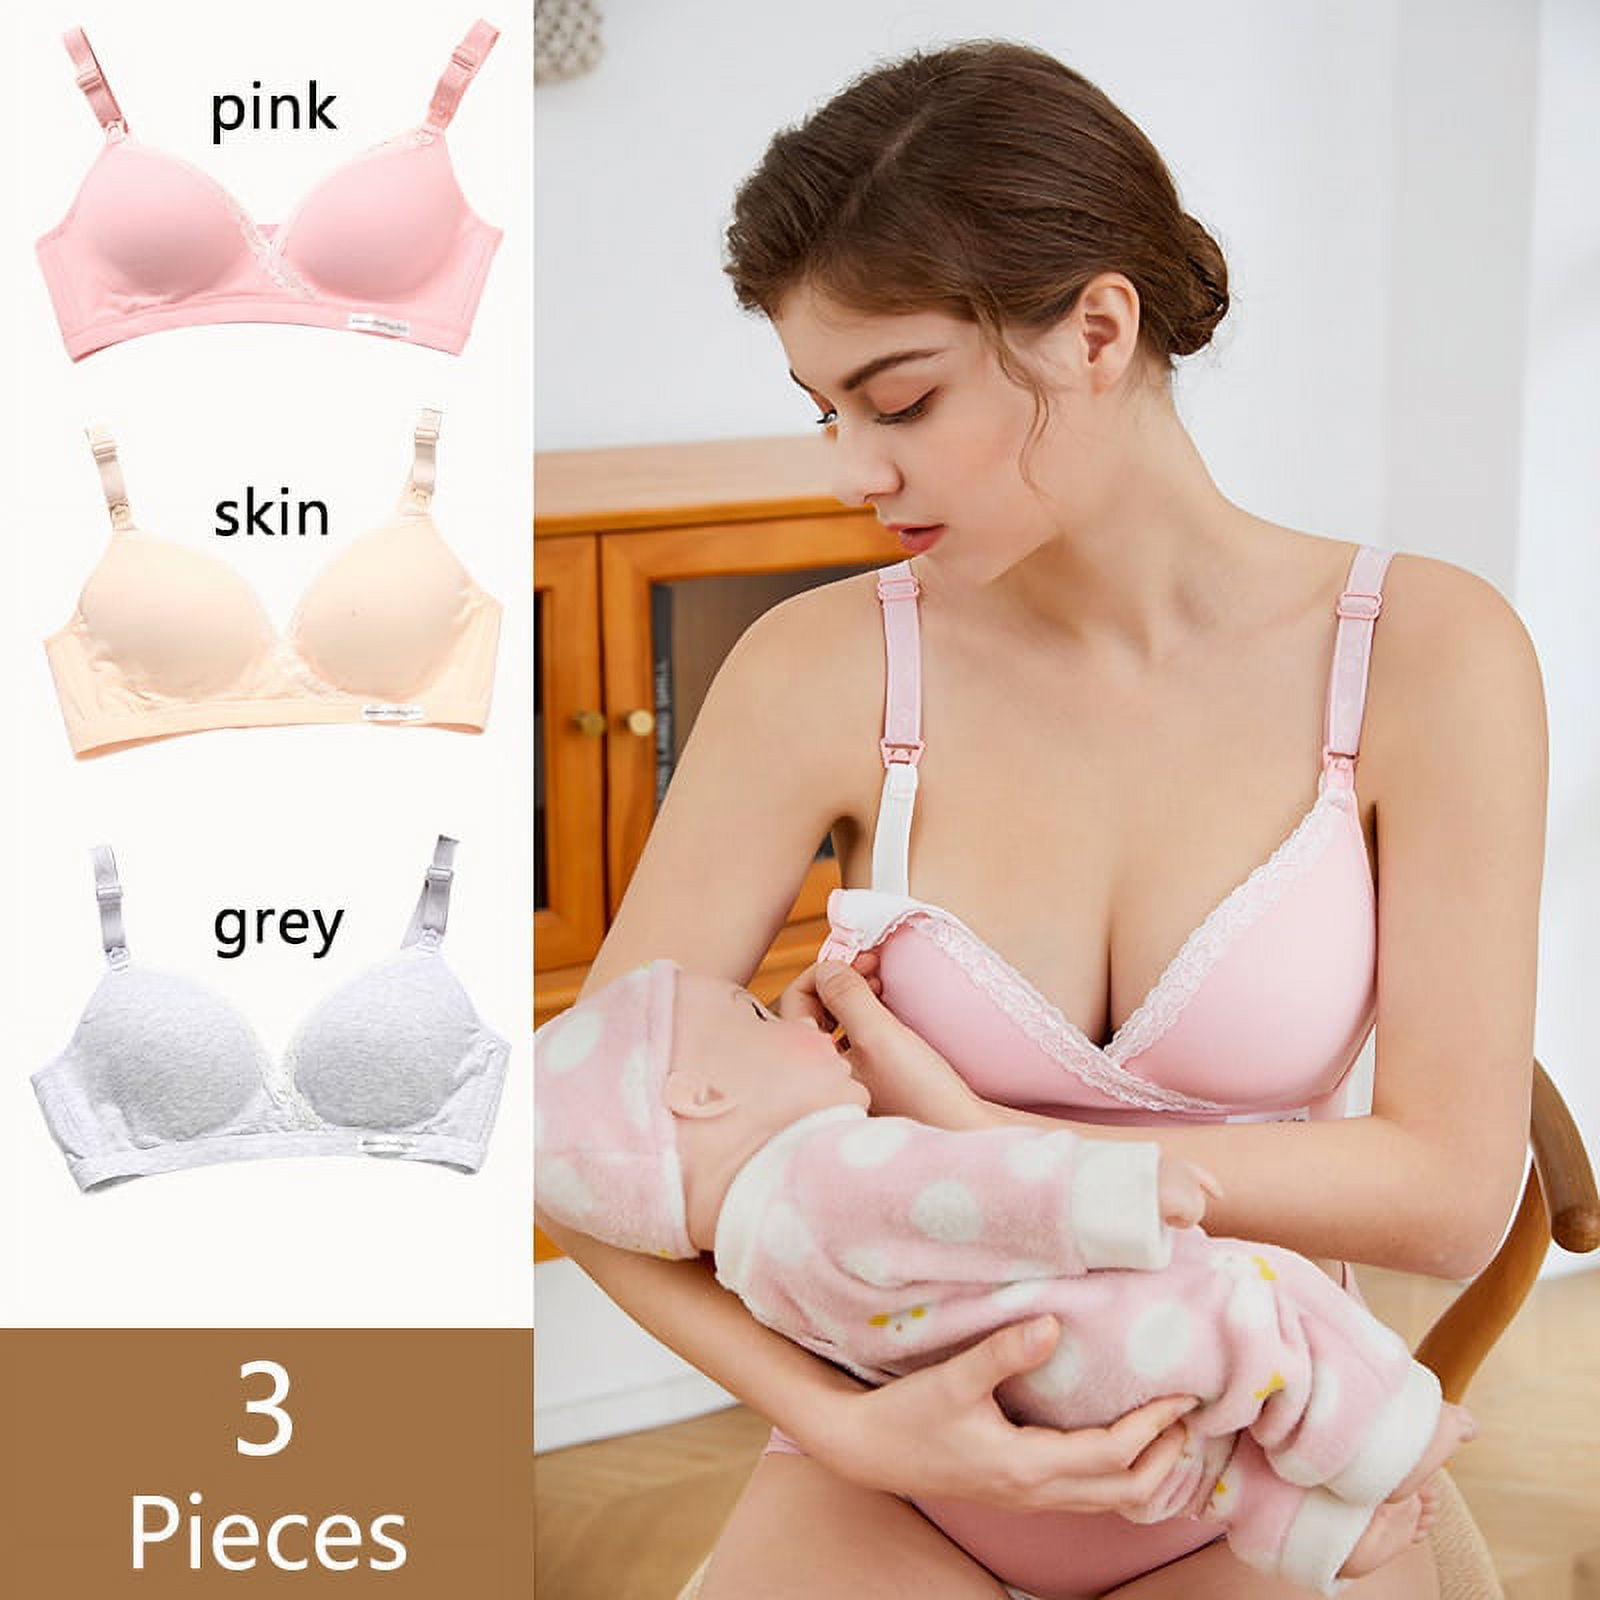 Goo-goat breast-feeding underwear bra for pregnant women during pregnancy  can wear BRA summer thin for sleeping during pregnancy.